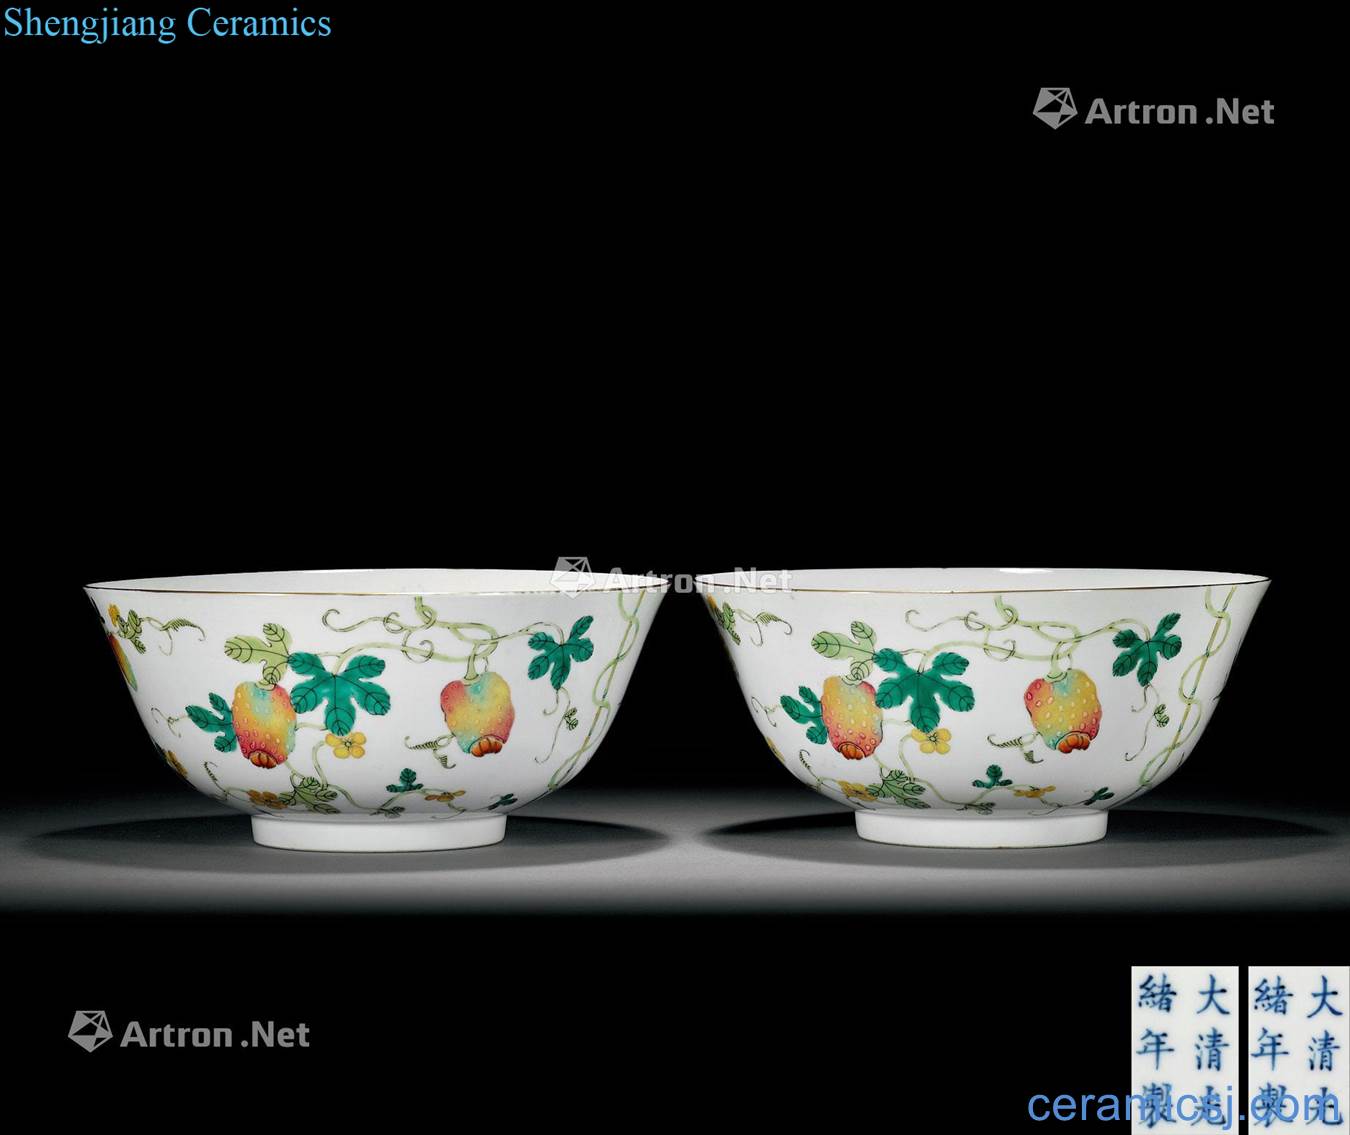 Pastel reign of qing emperor guangxu bitter gourd bowls (a)